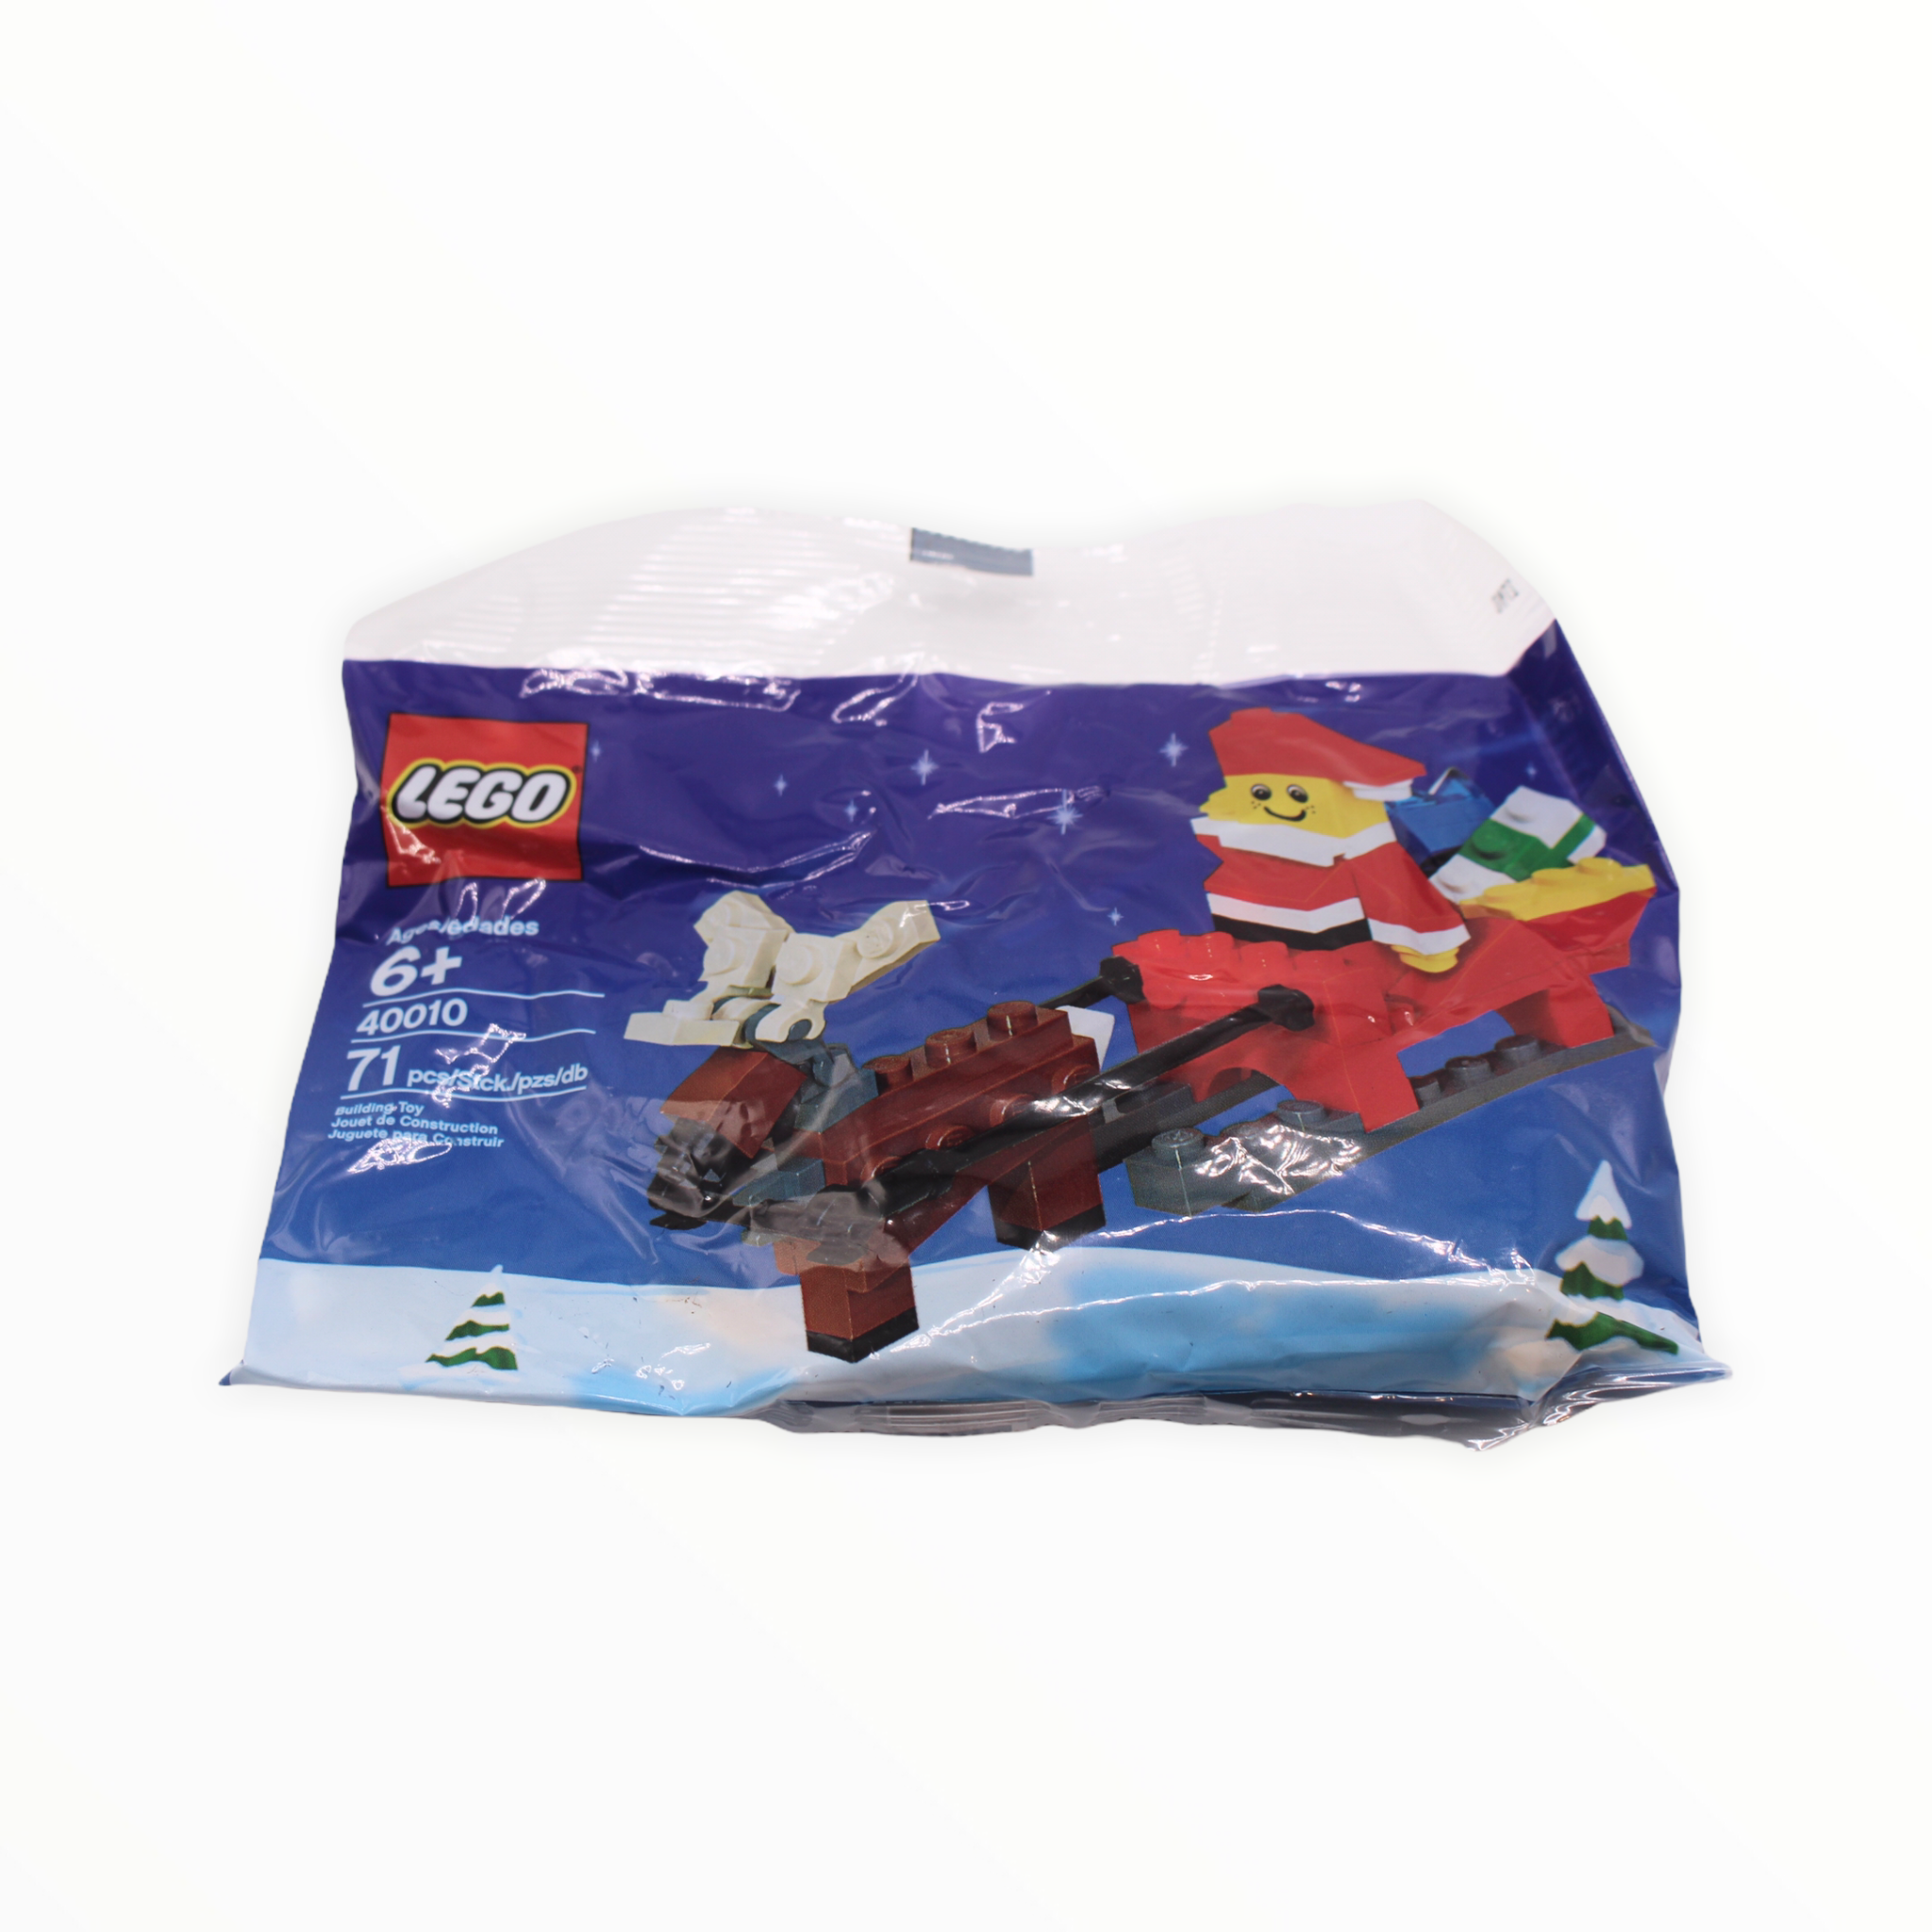 Polybag 40010 LEGO Santa with Sleigh